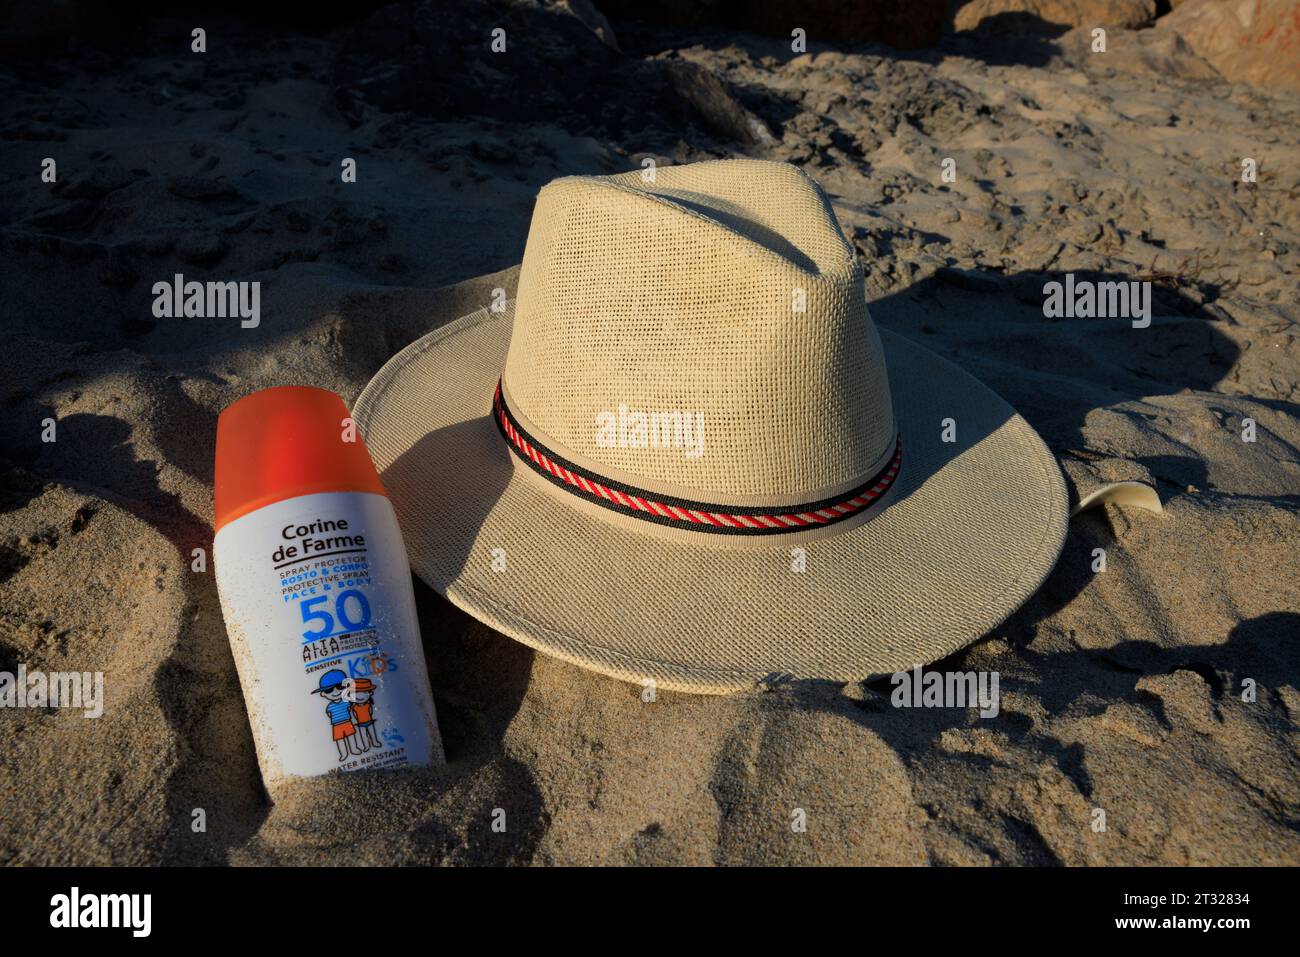 Sun cream bottle and a Panama sun hat in the sand on a beach on Ilha do Farol (Lighthouse Island) off the coast of Olhão in Portugal. Stock Photo